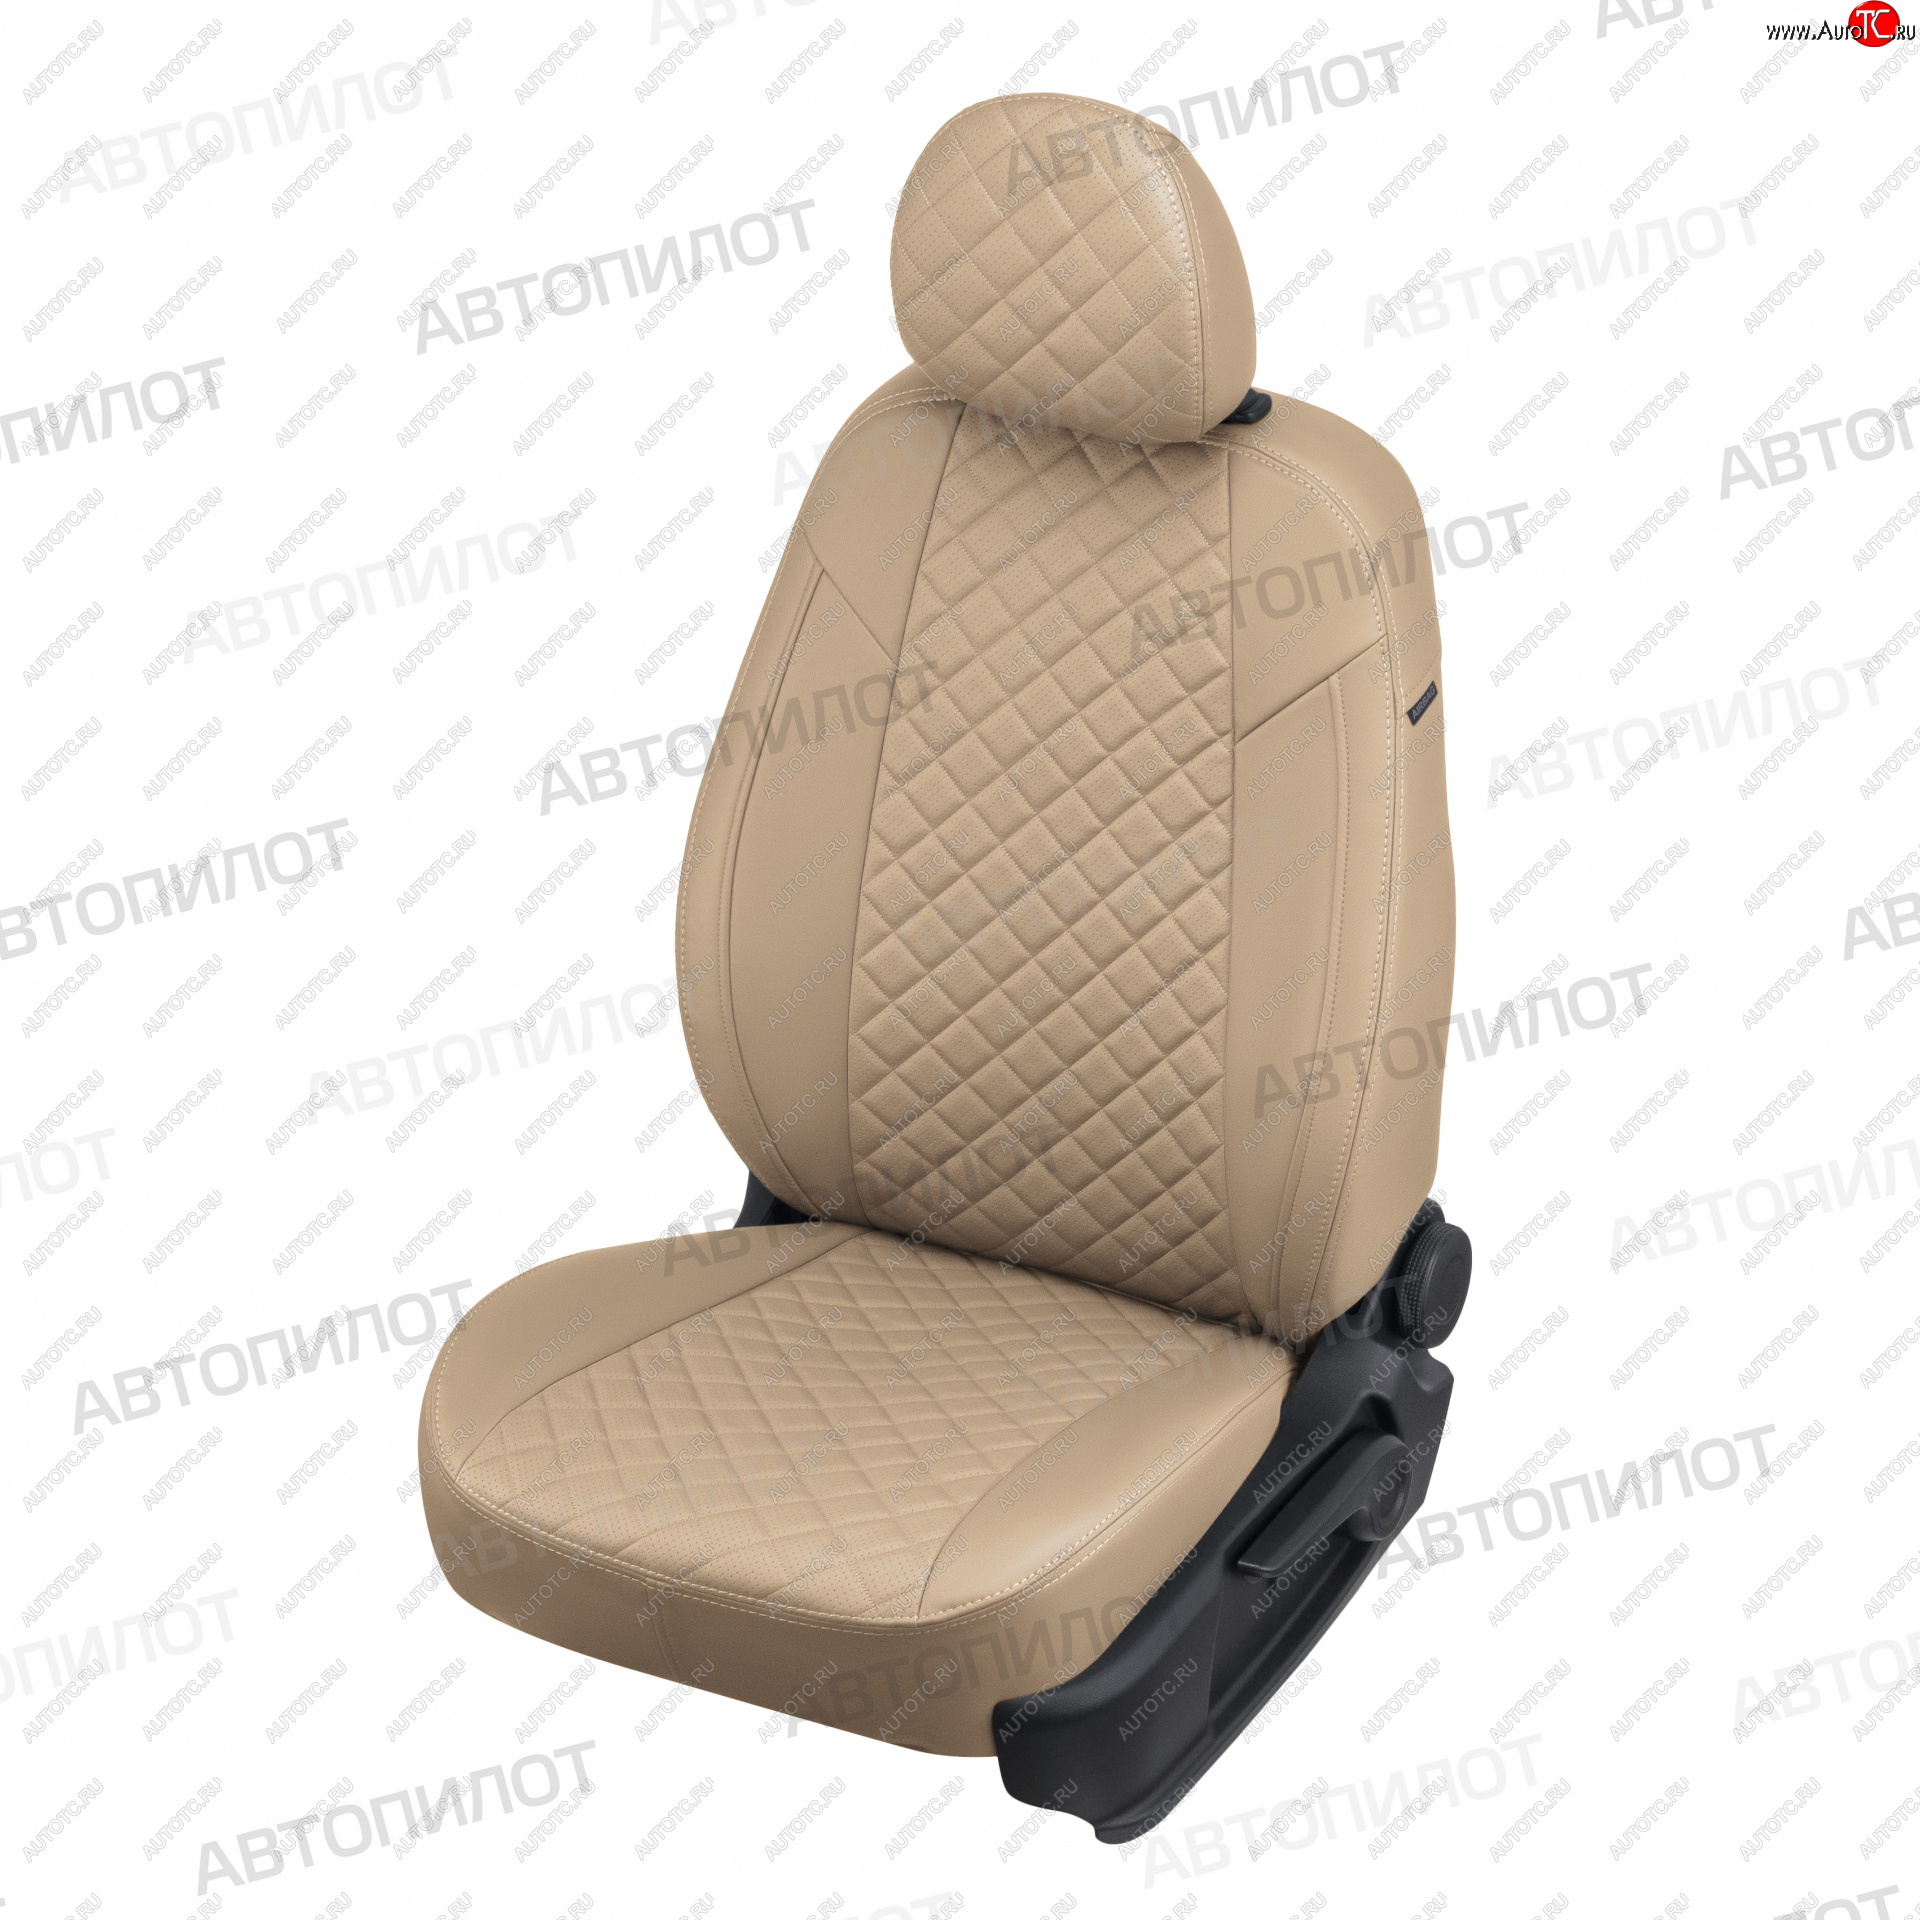 13 999 р. Чехлы сидений (экокожа) Автопилот Ромб  Ford Mondeo (2000-2007) (темно-бежевый)